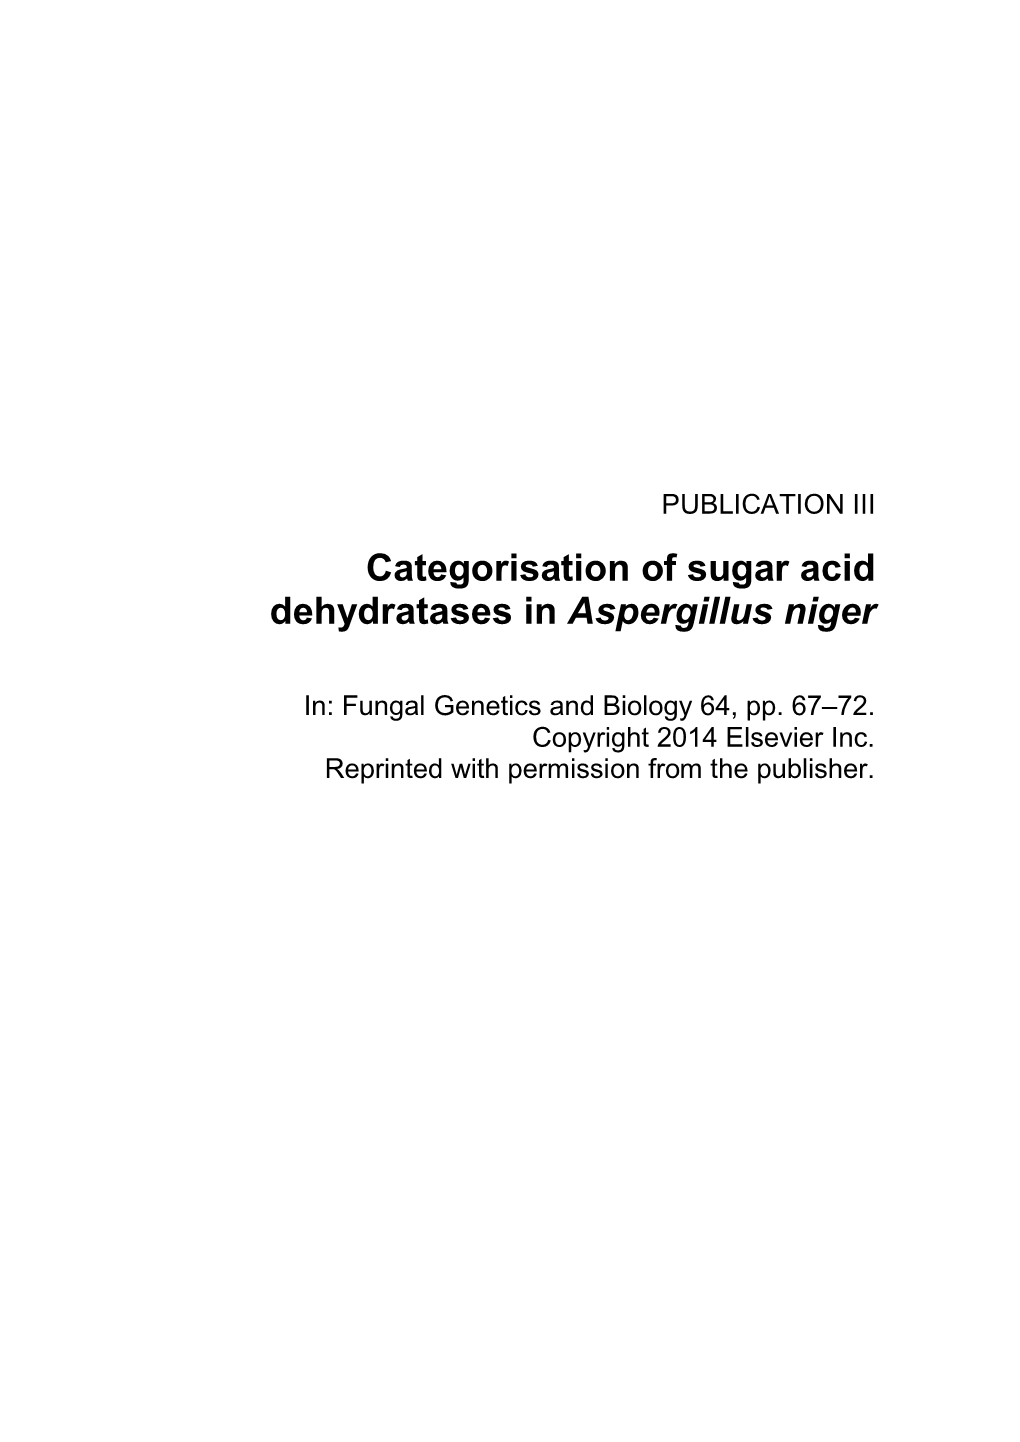 Categorisation of Sugar Acid Dehydratases in Aspergillus Niger